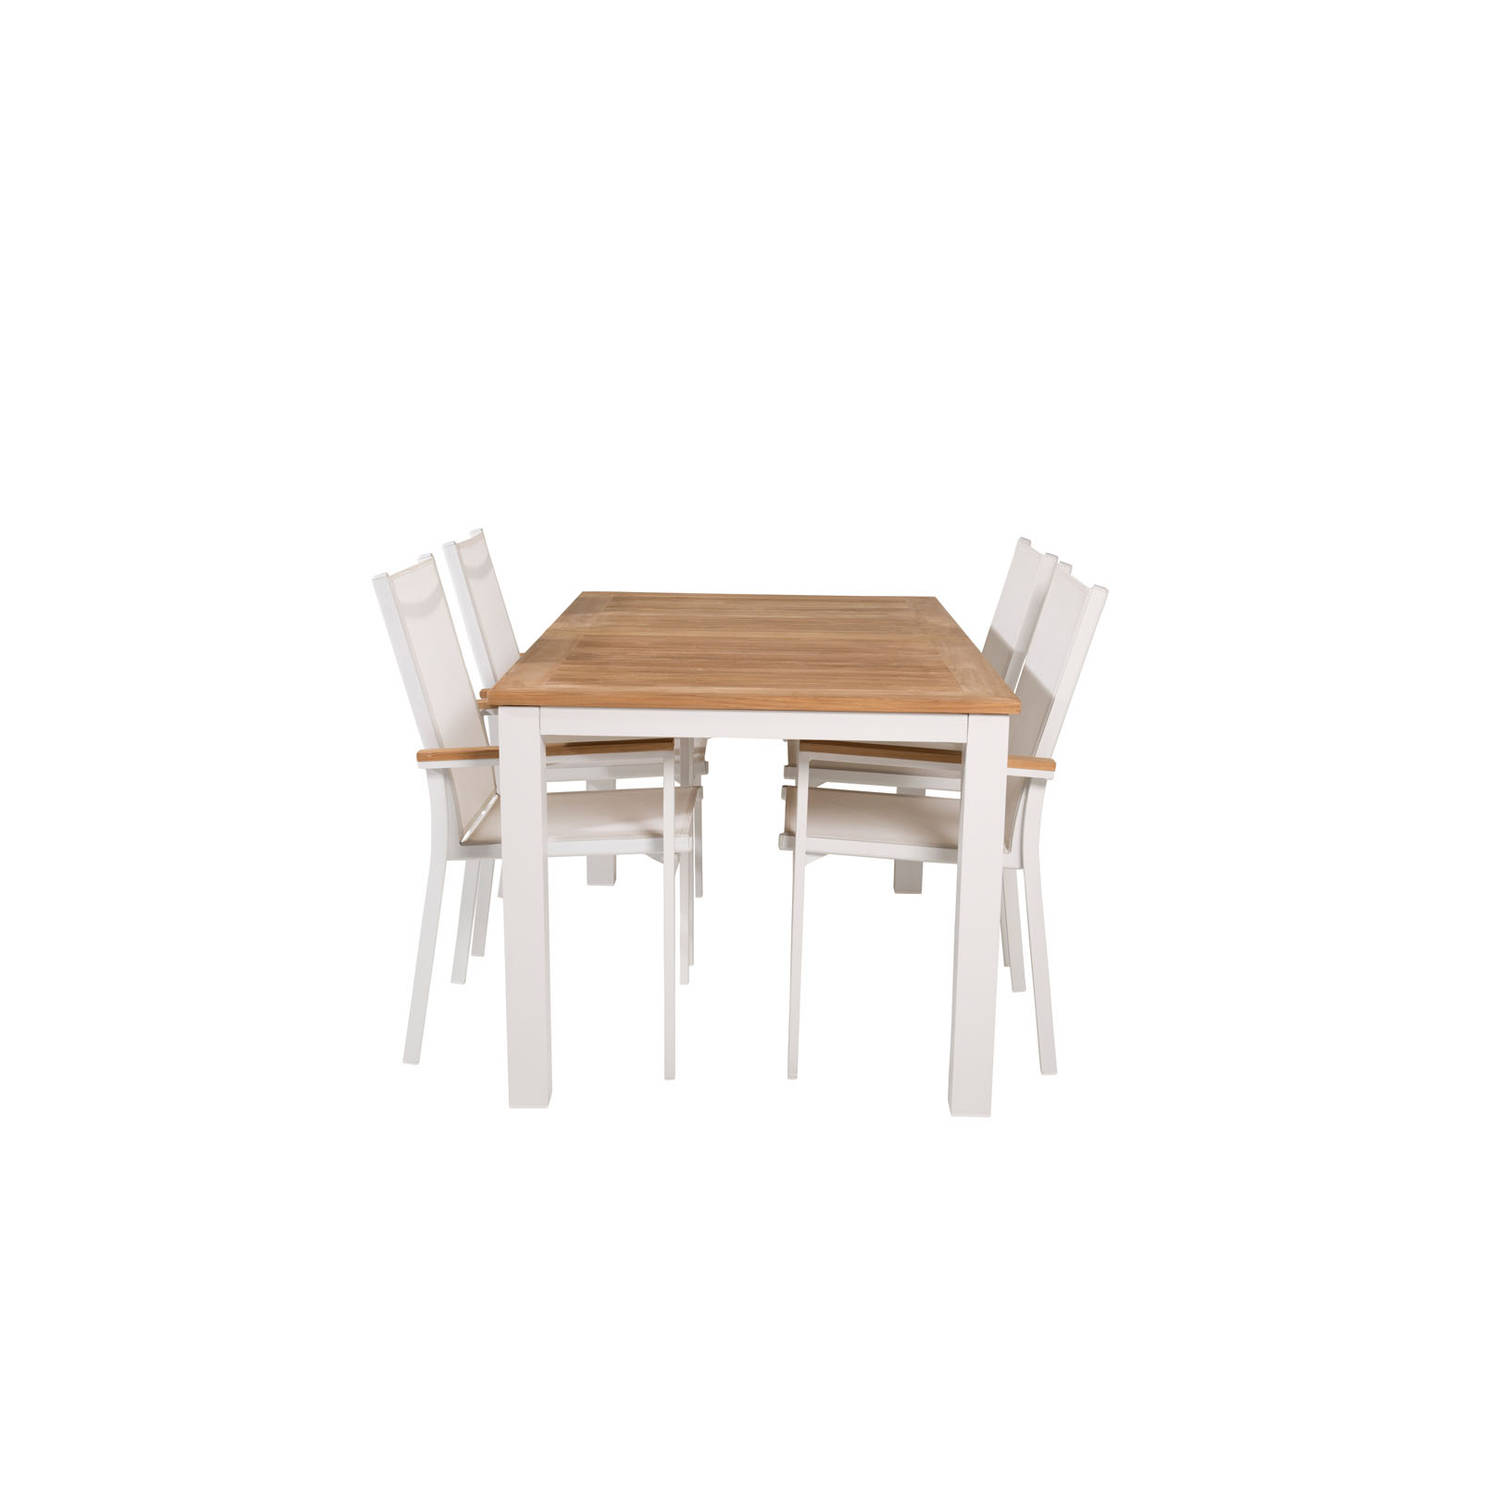 Panama tuinmeubelset tafel 90x152/210cm en 4 stoel Texas wit, naturel.